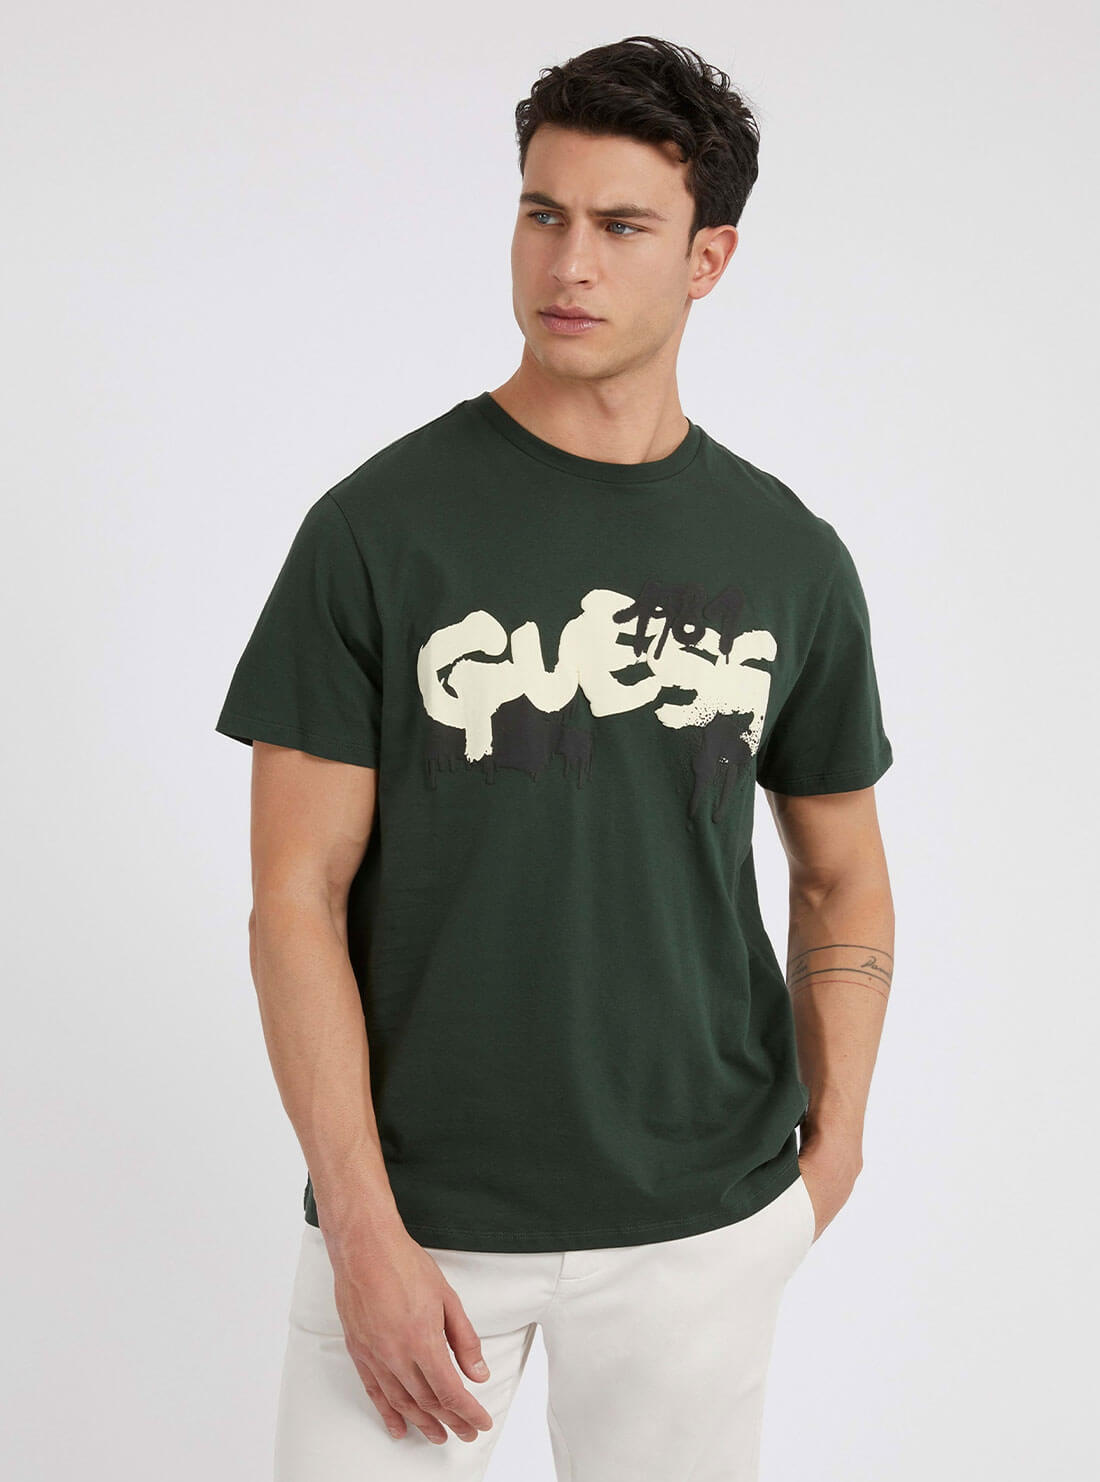 Eco Green Graffiti Logo T-Shirt | GUESS Men's Apparel | front view